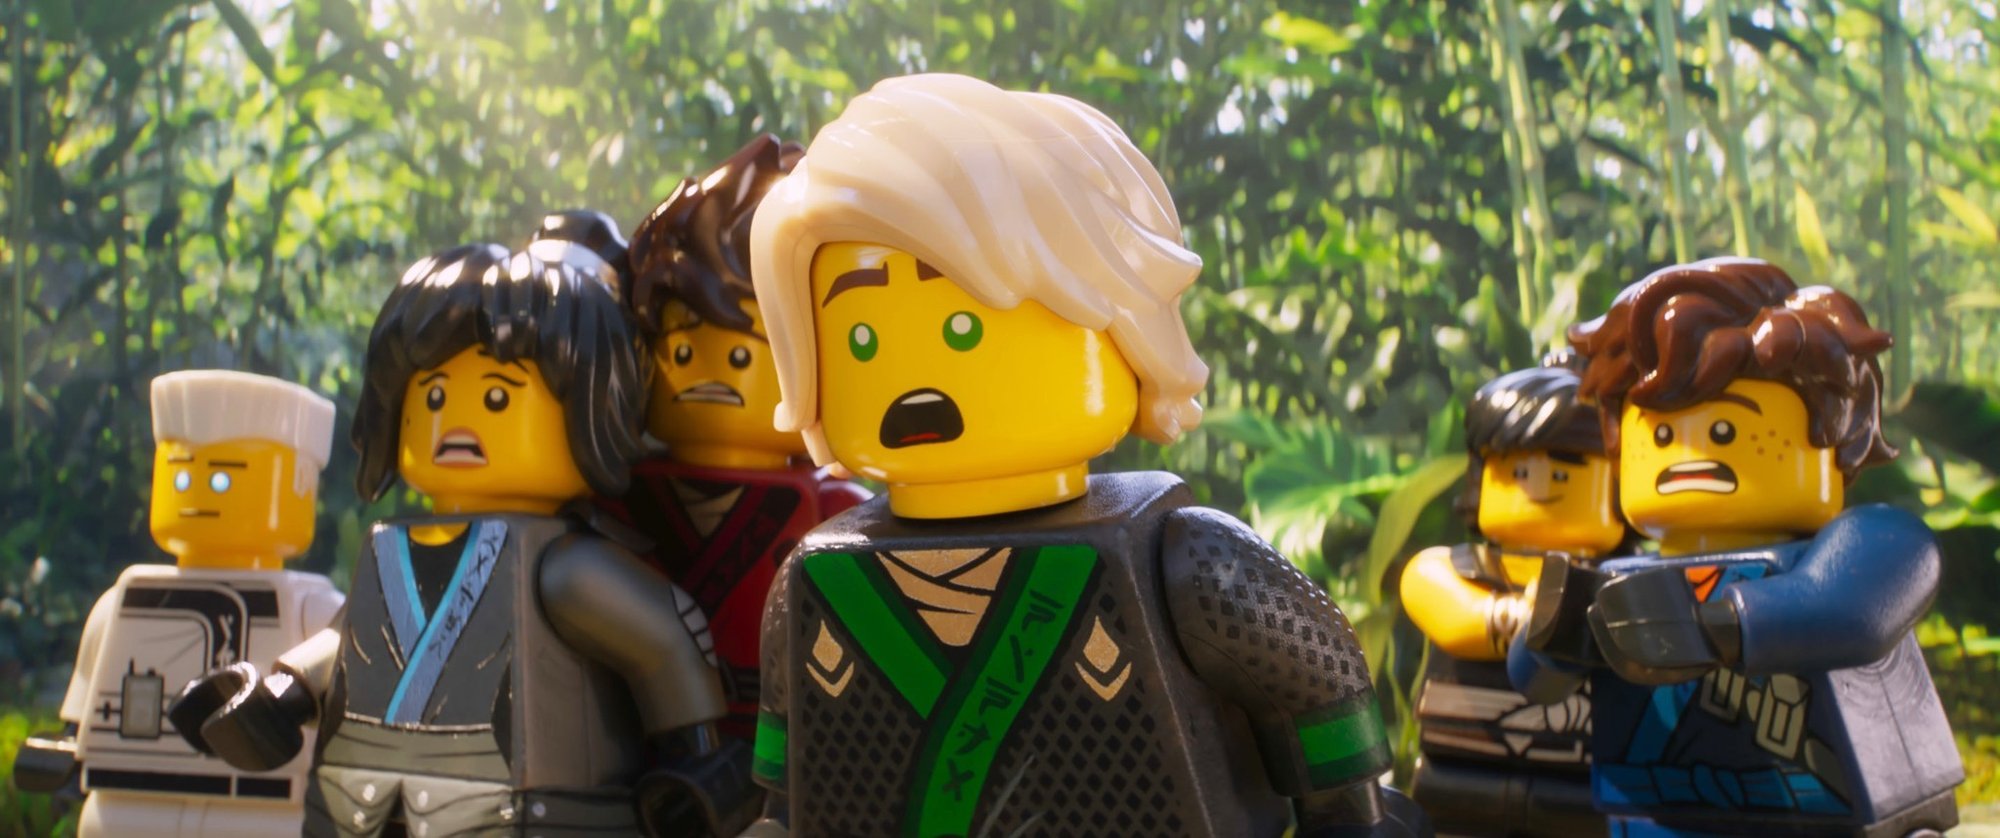 Zane, Nya, Kai, Lloyd, Cole and Jay from Warner Bros. Pictures' The Lego Ninjago Movie (2017)